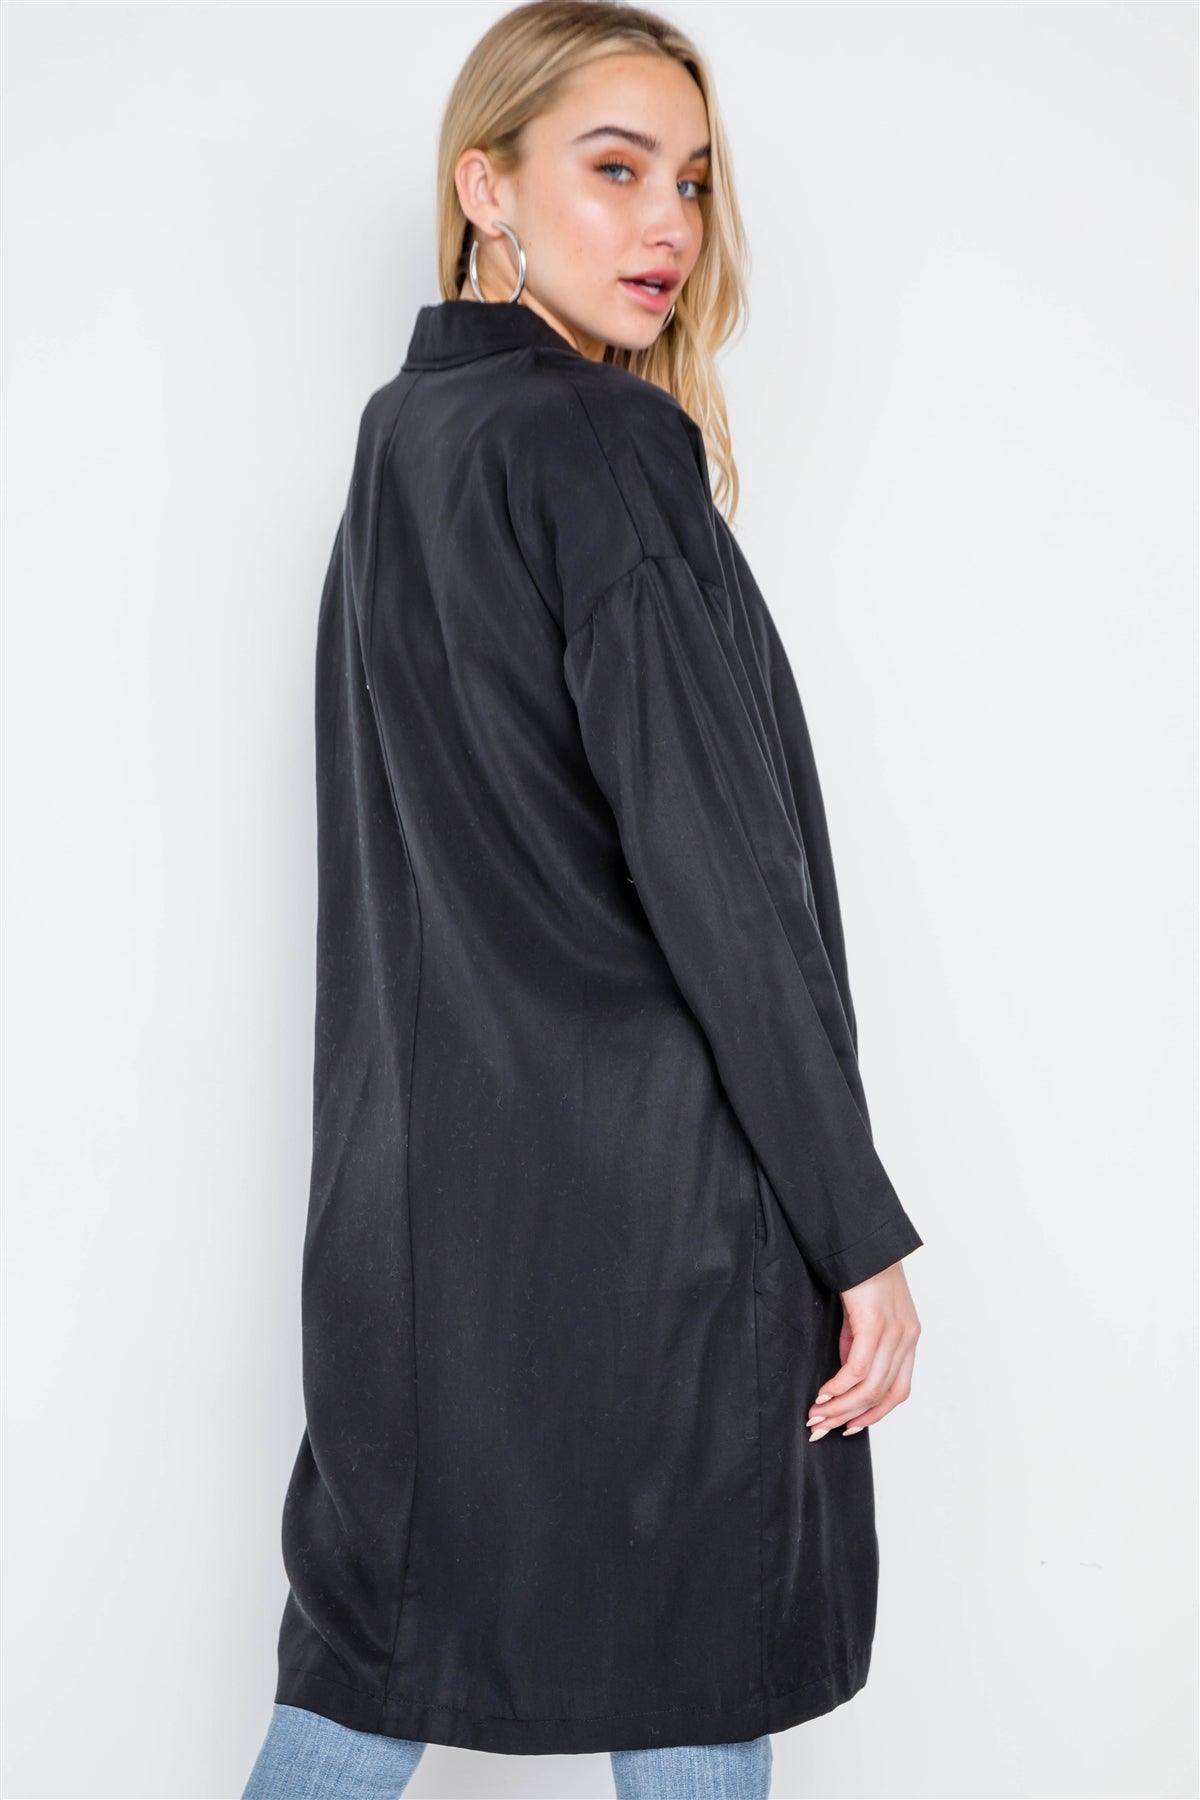 Black Solid Long Sleeve Tencel Coat